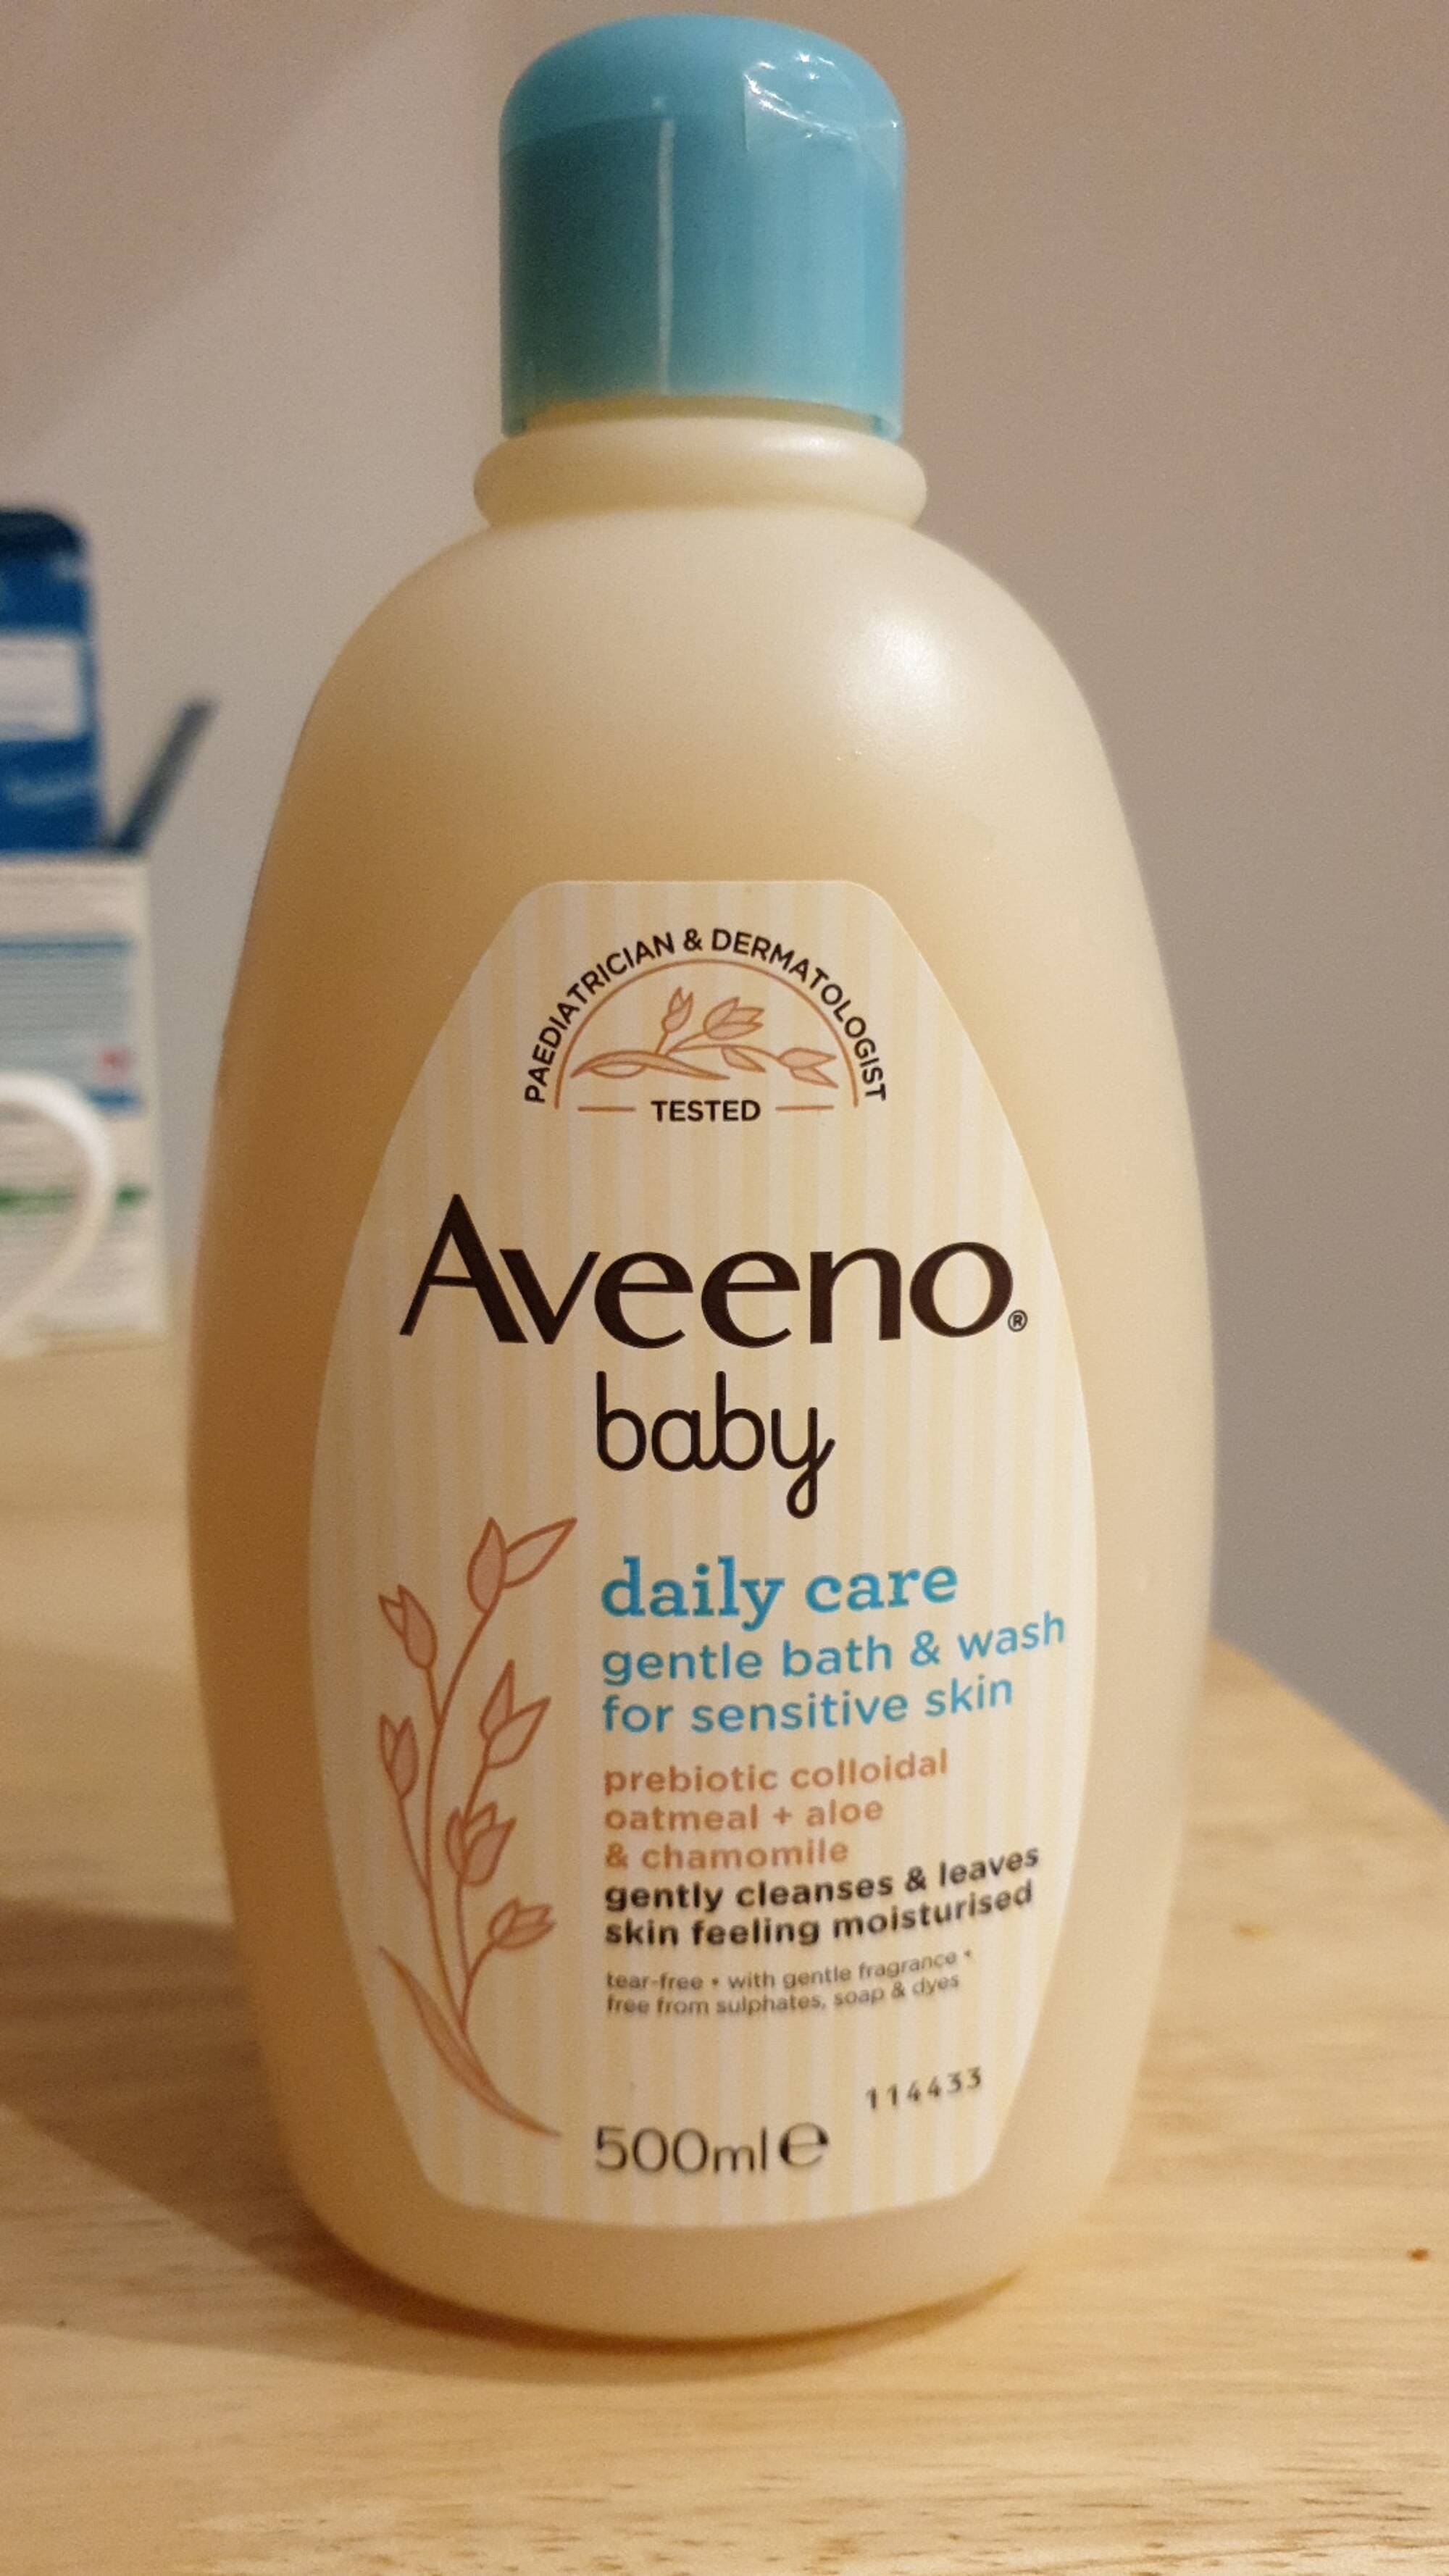 AVEENO - Baby - Daily care gentle bath & wash for sensitive skin